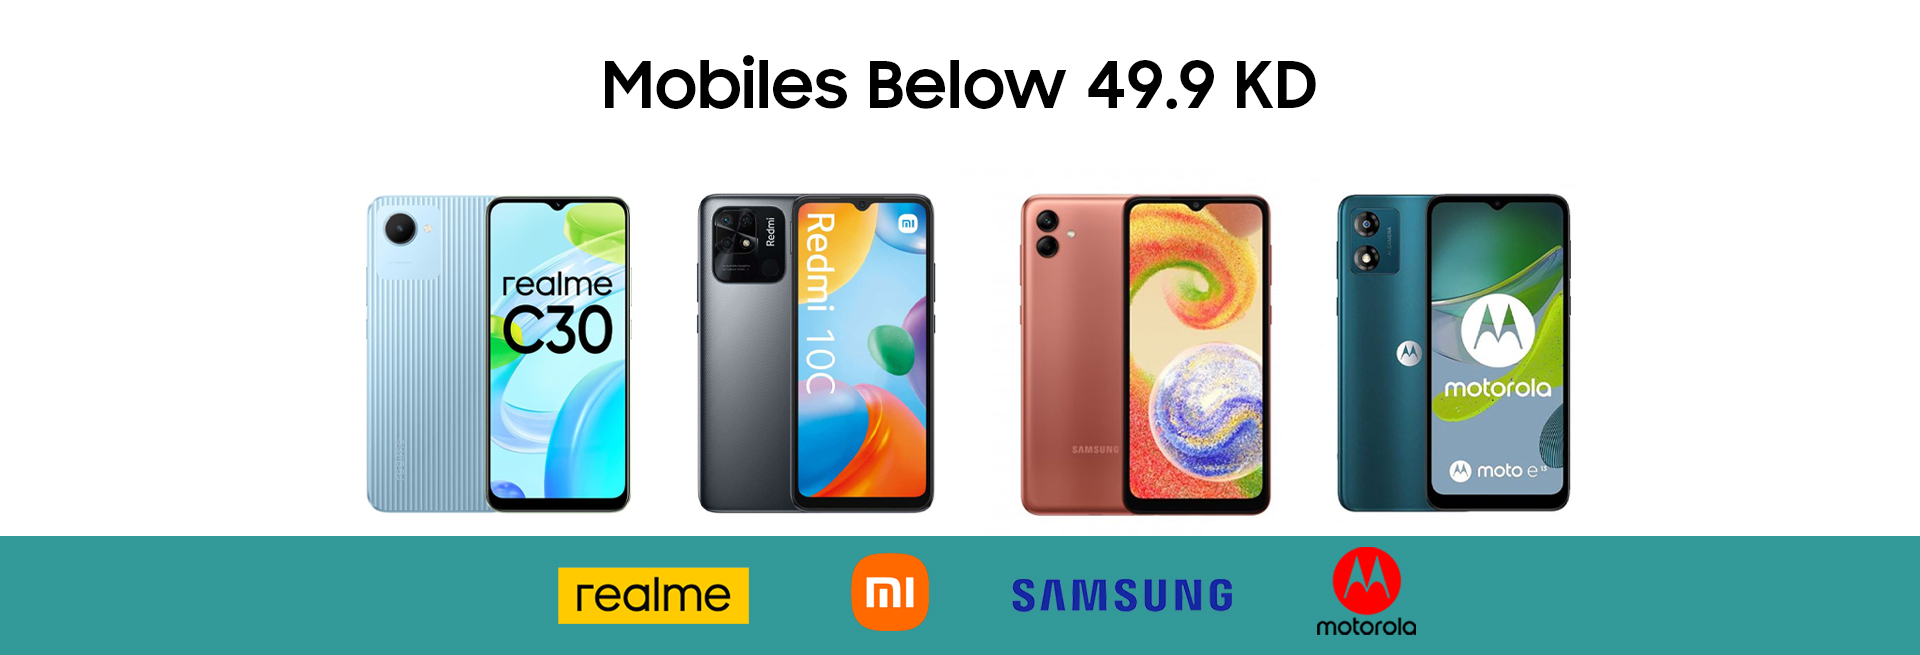 Mobiles Below 49.9 KD